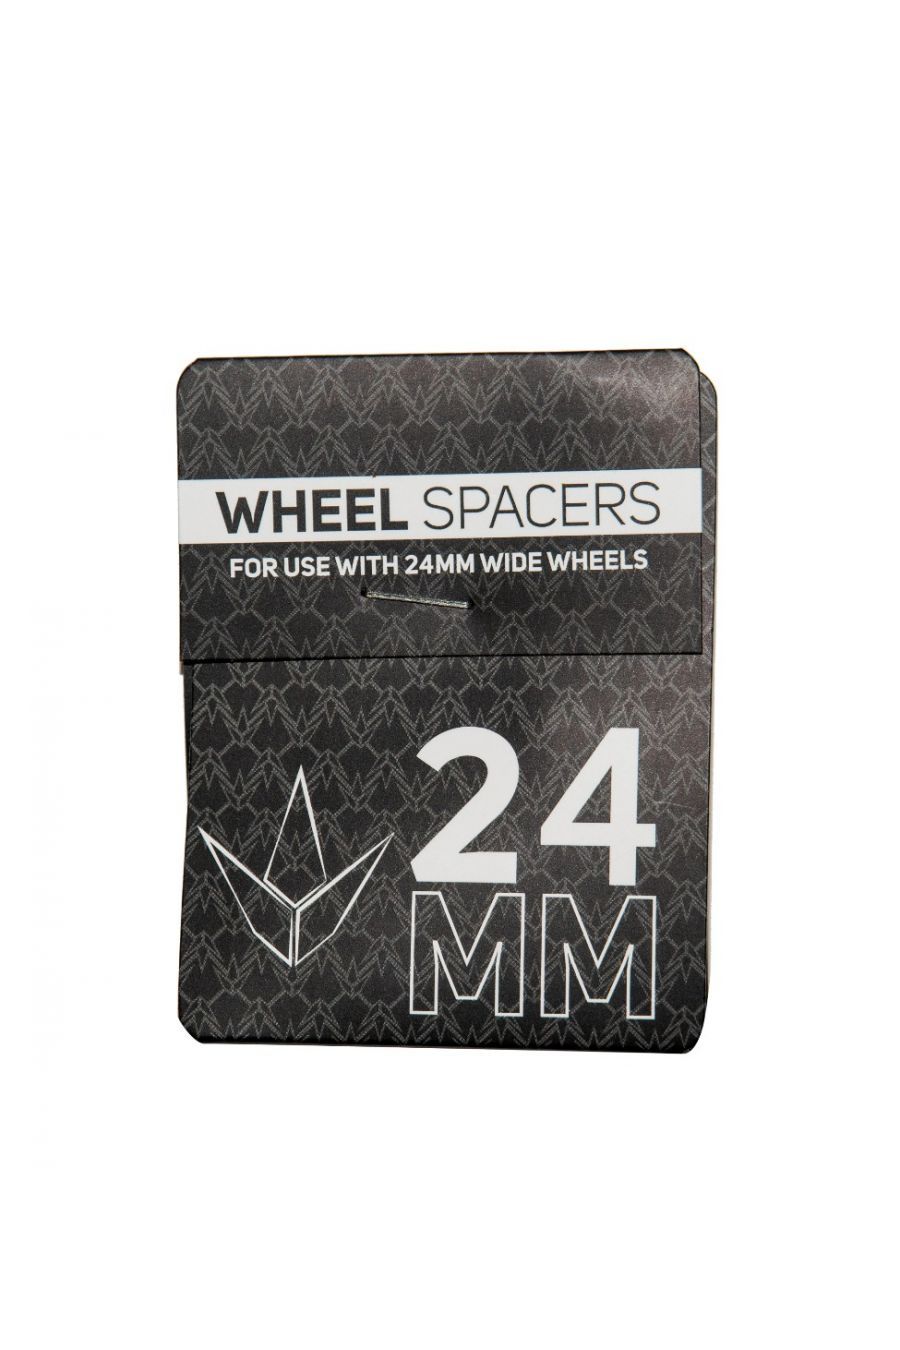 Kit Wheel Spacers pour Trottinette - 24mm